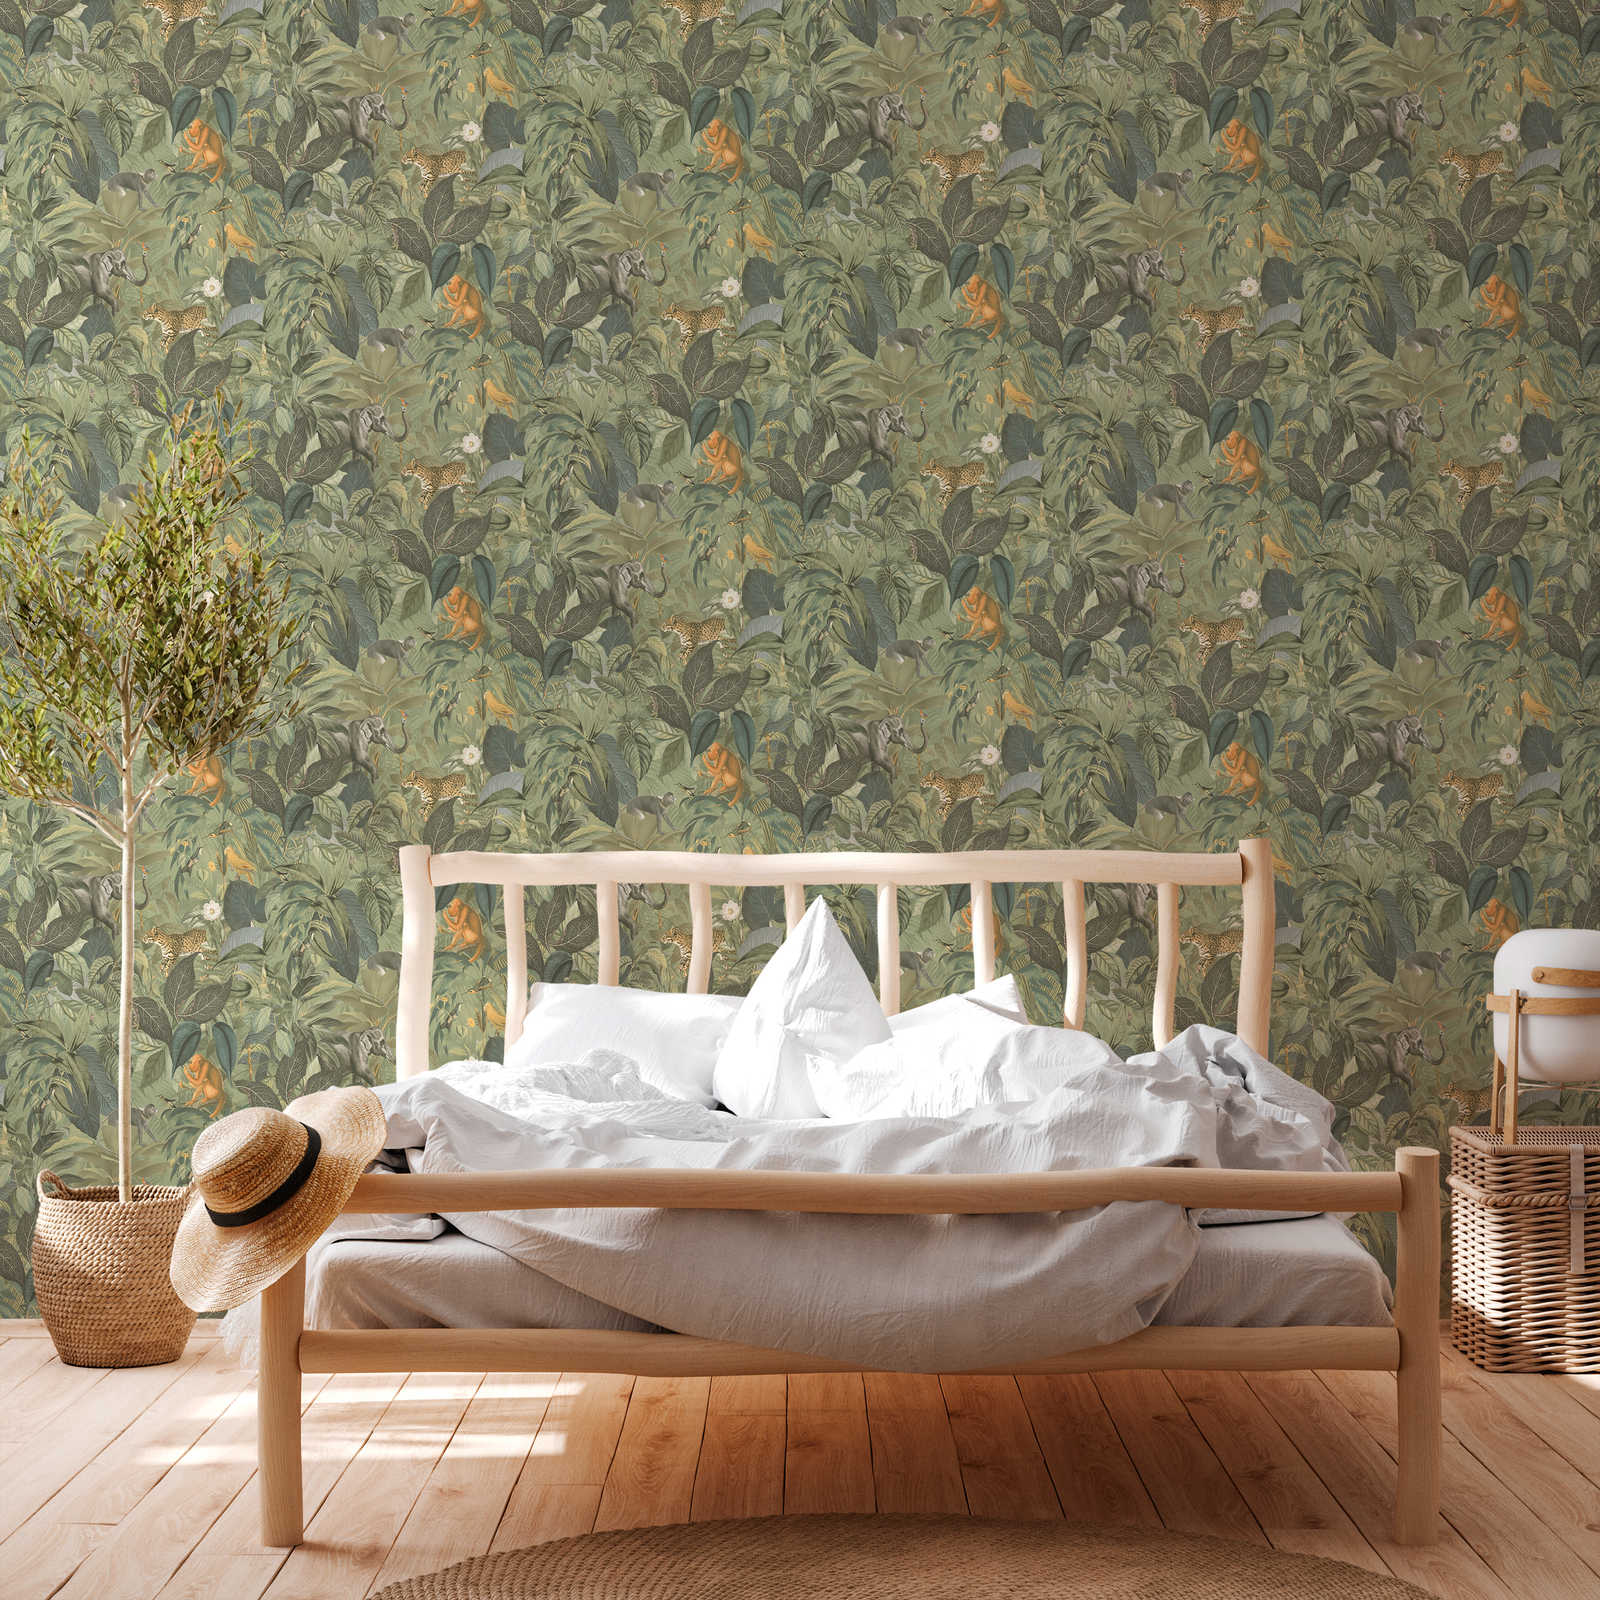             Jungle wallpaper with animals, children motif - grey, green
        